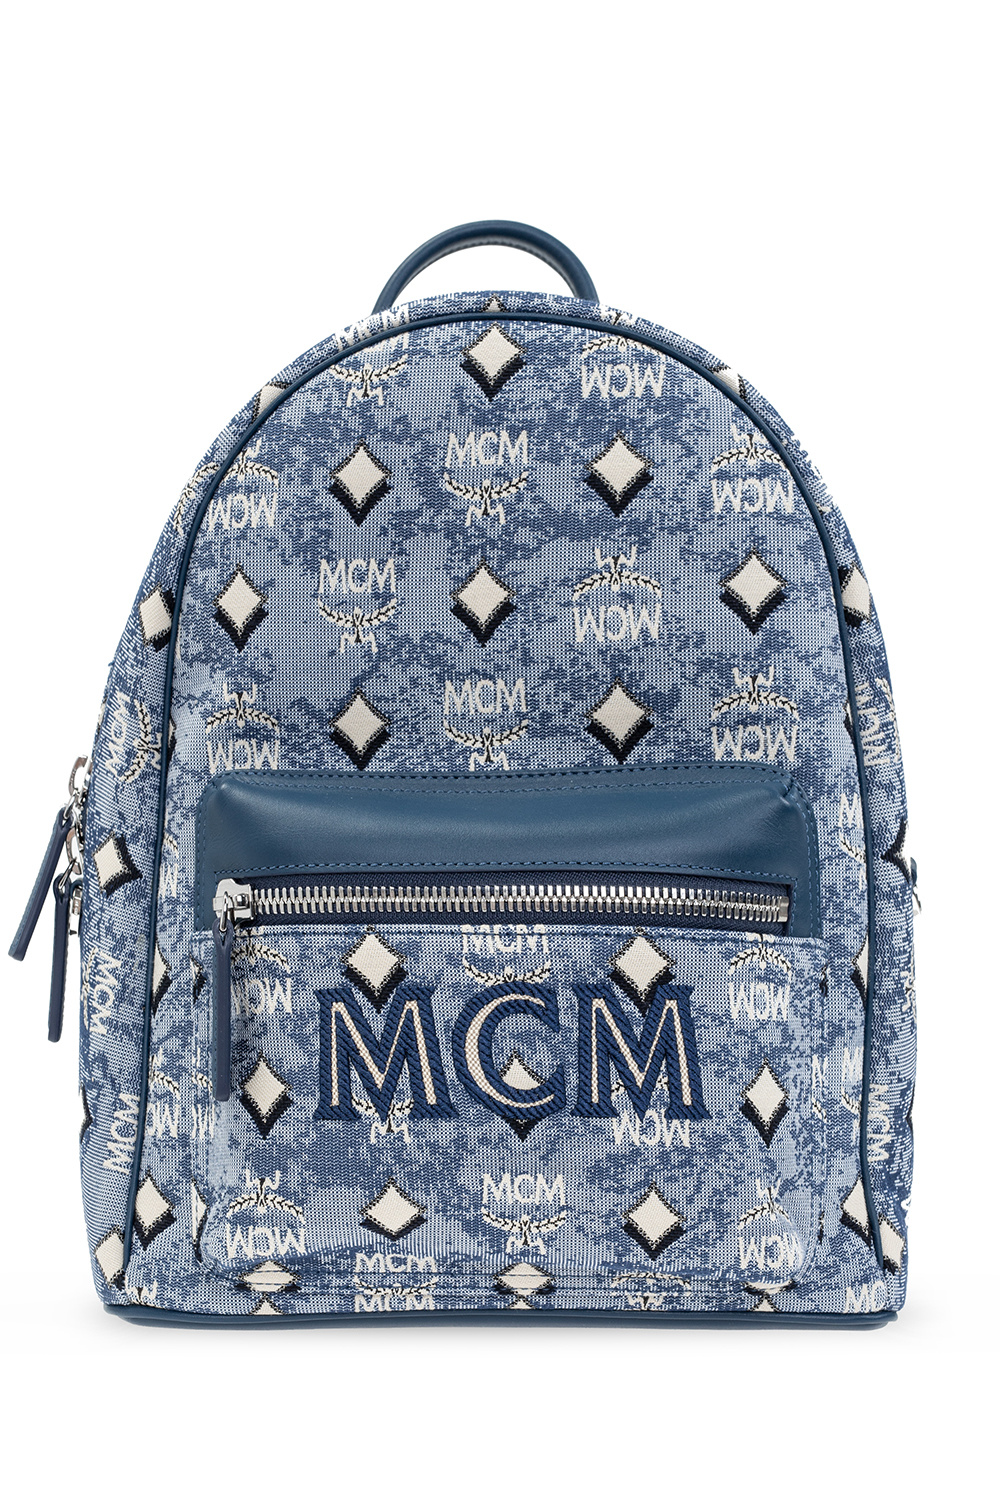 MCM Ferragamo backpack with logo